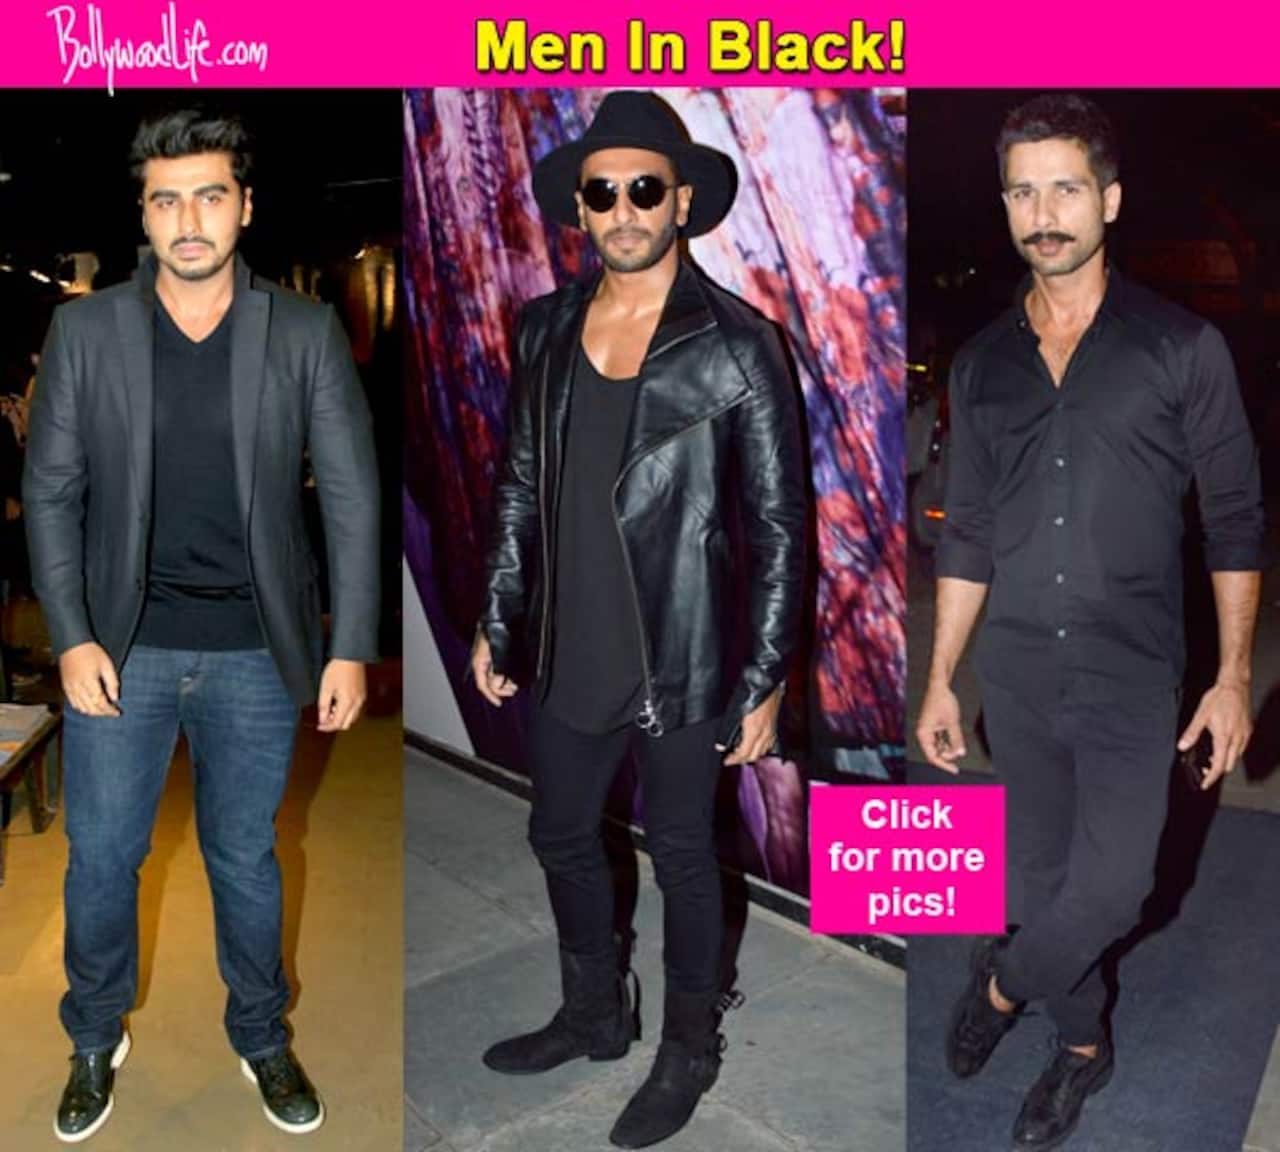 Men in black! Ranveer Singh, Shahid Kapoor, Arjun Kapoor look dapper as they attend an event - view HQ pics!